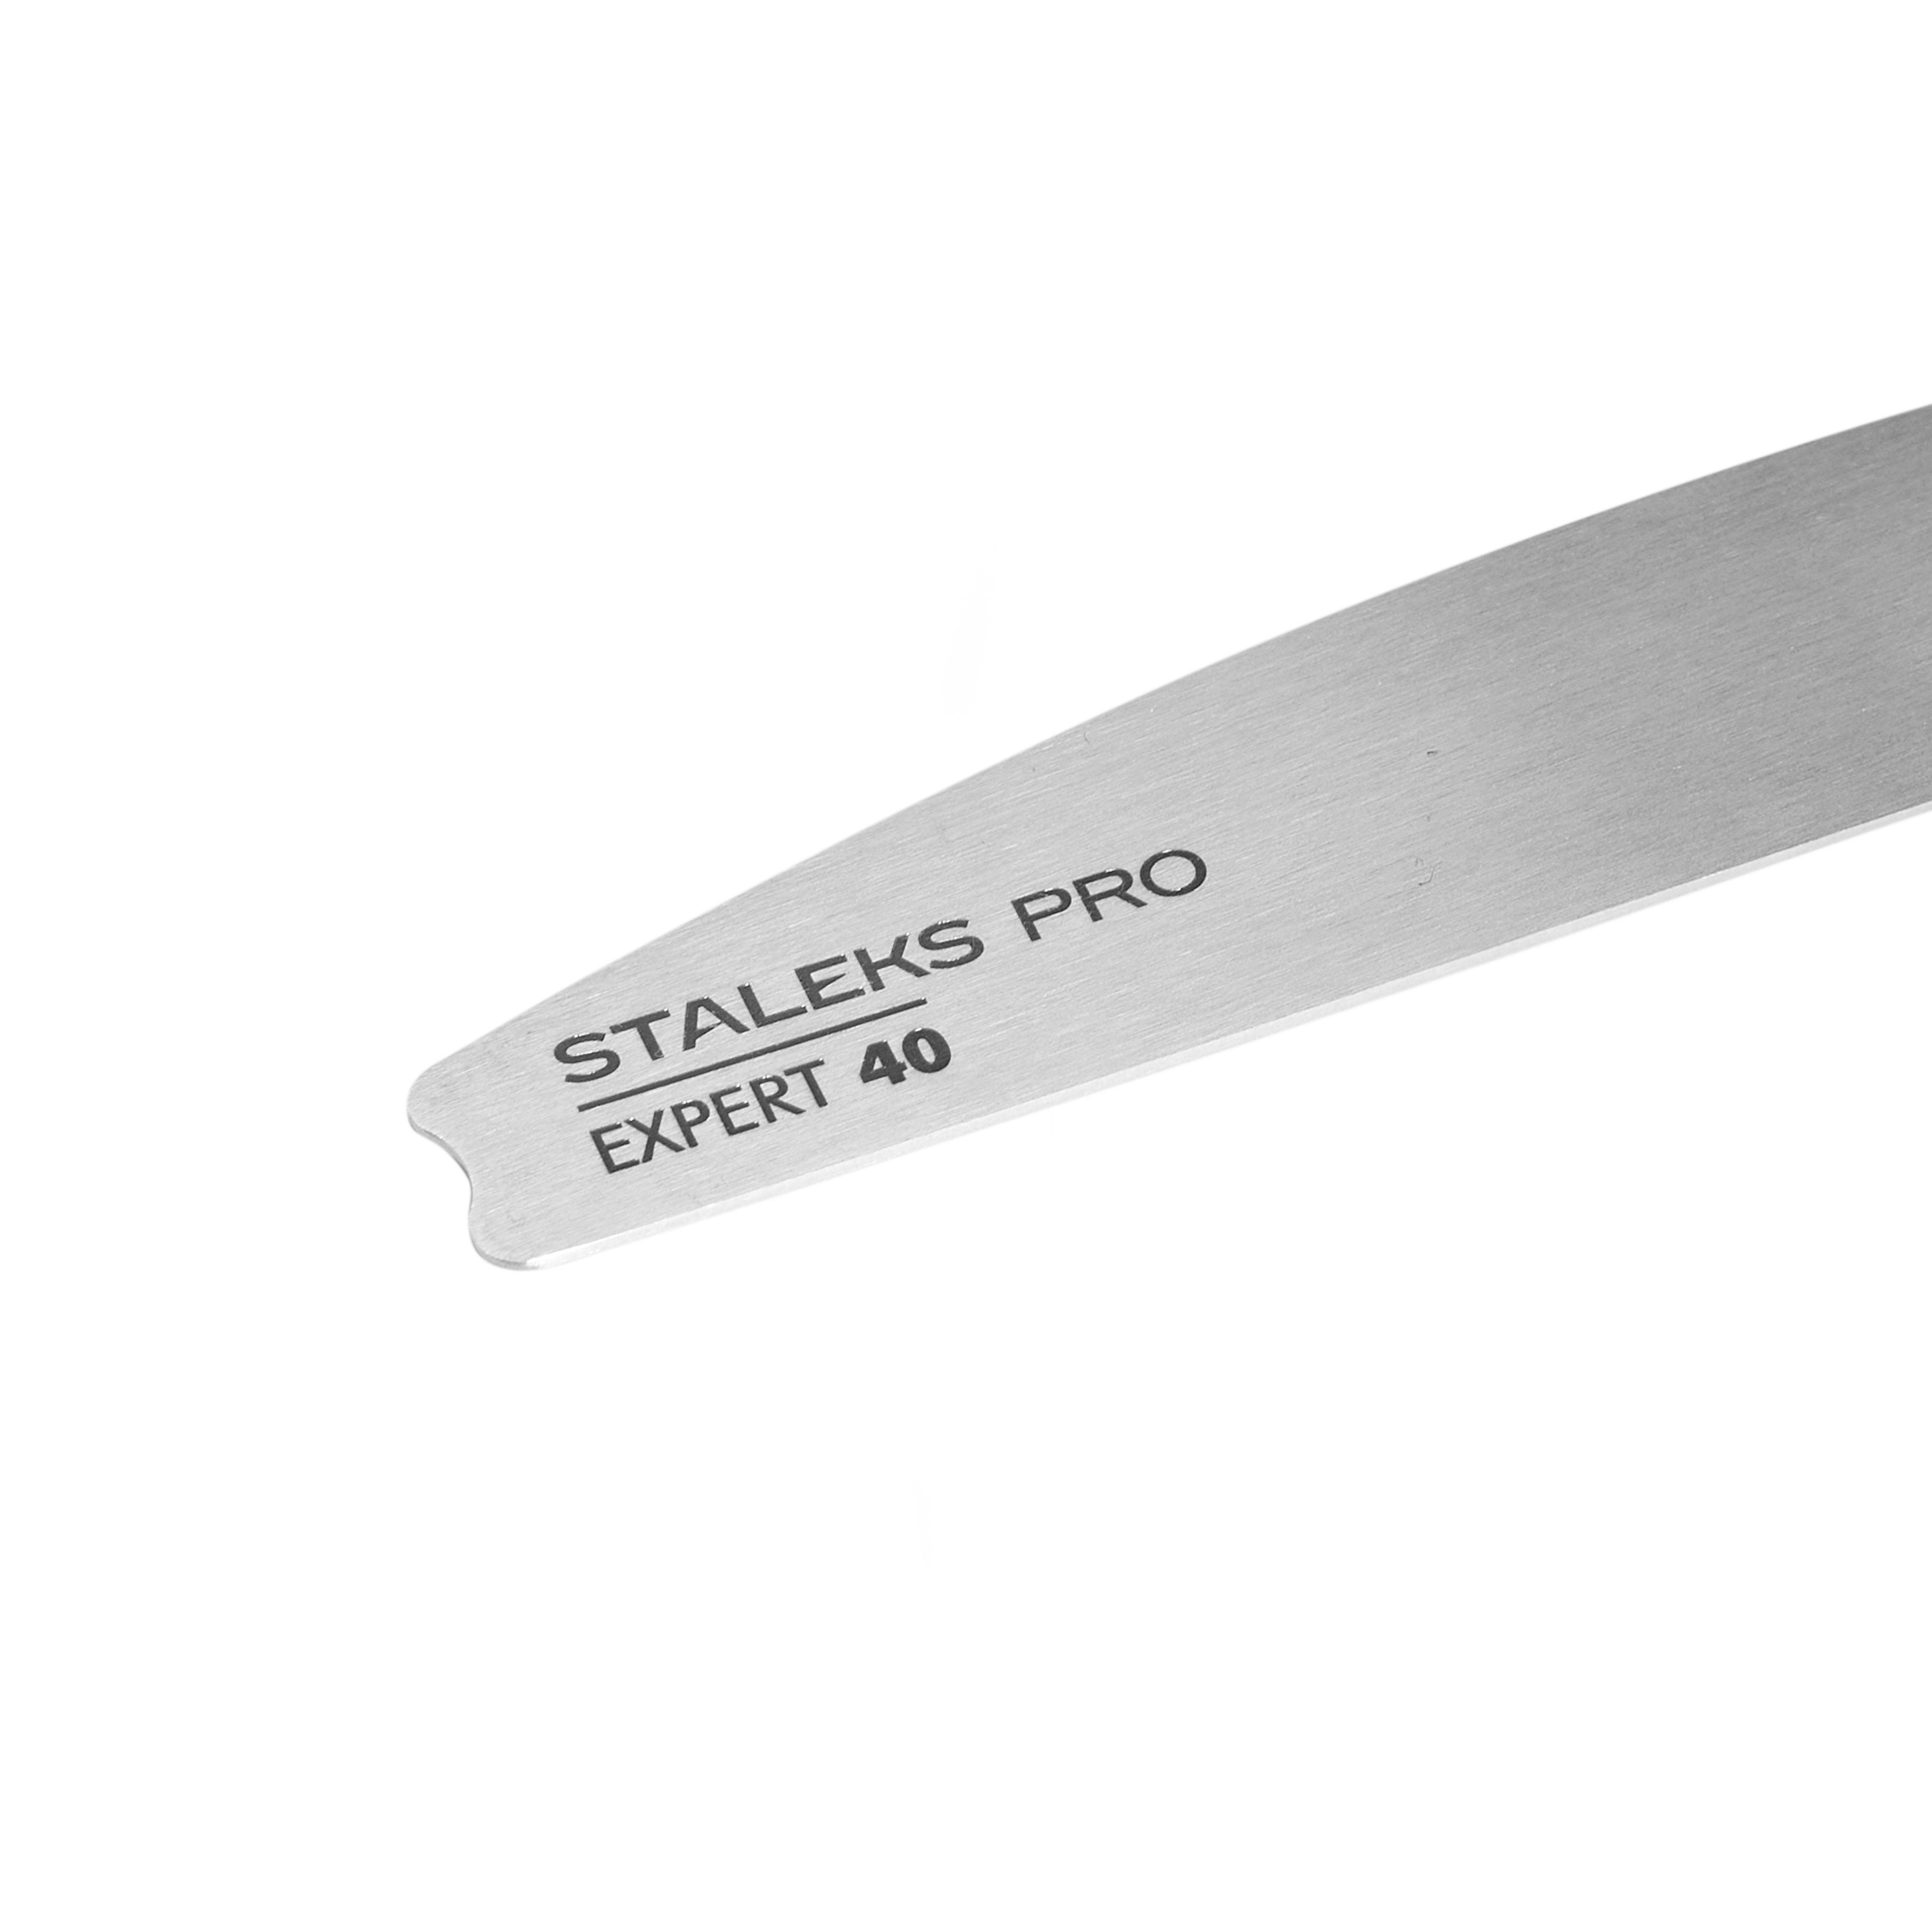 Nail file metal crescent (base) EXPERT 40 Staleks